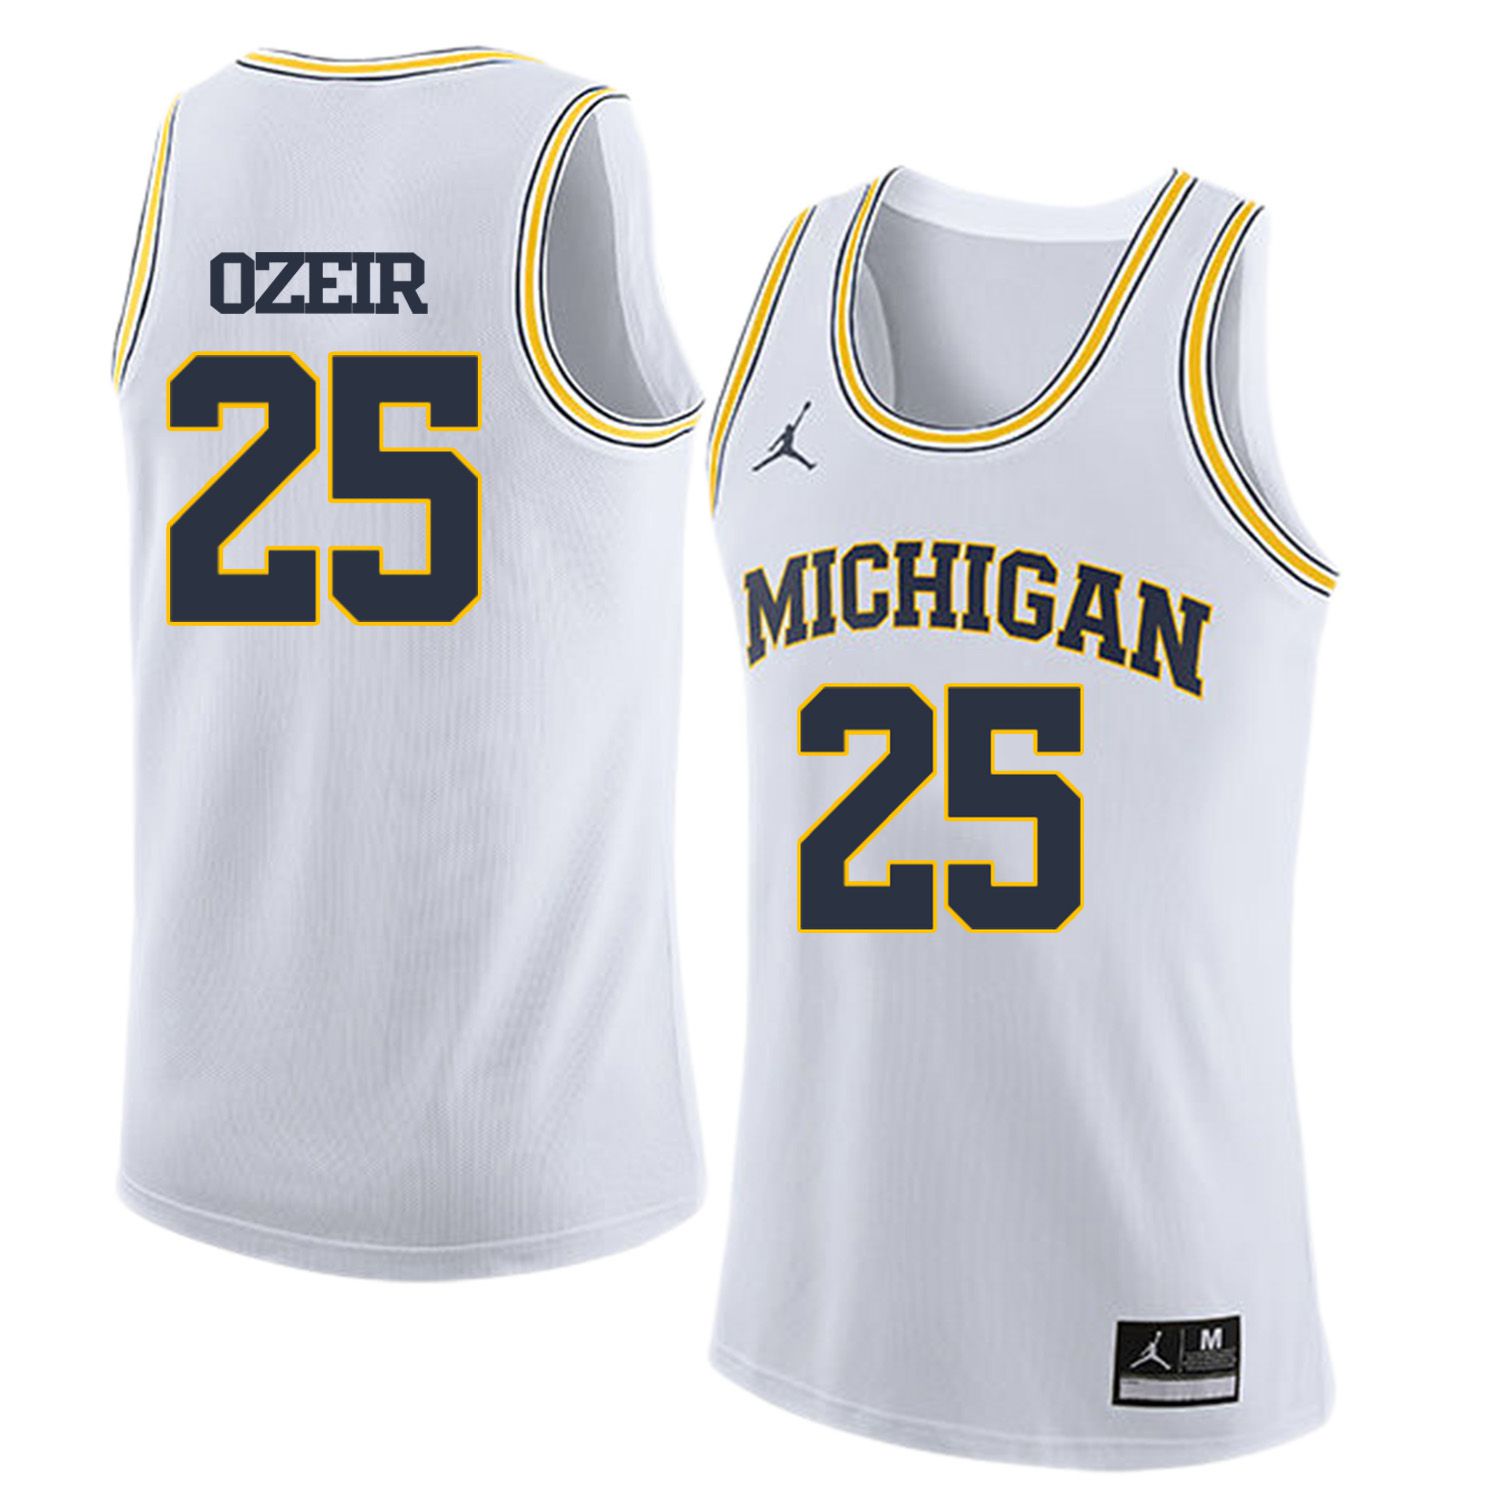 Men Jordan University of Michigan Basketball White 25 Ozeir Customized NCAA Jerseys